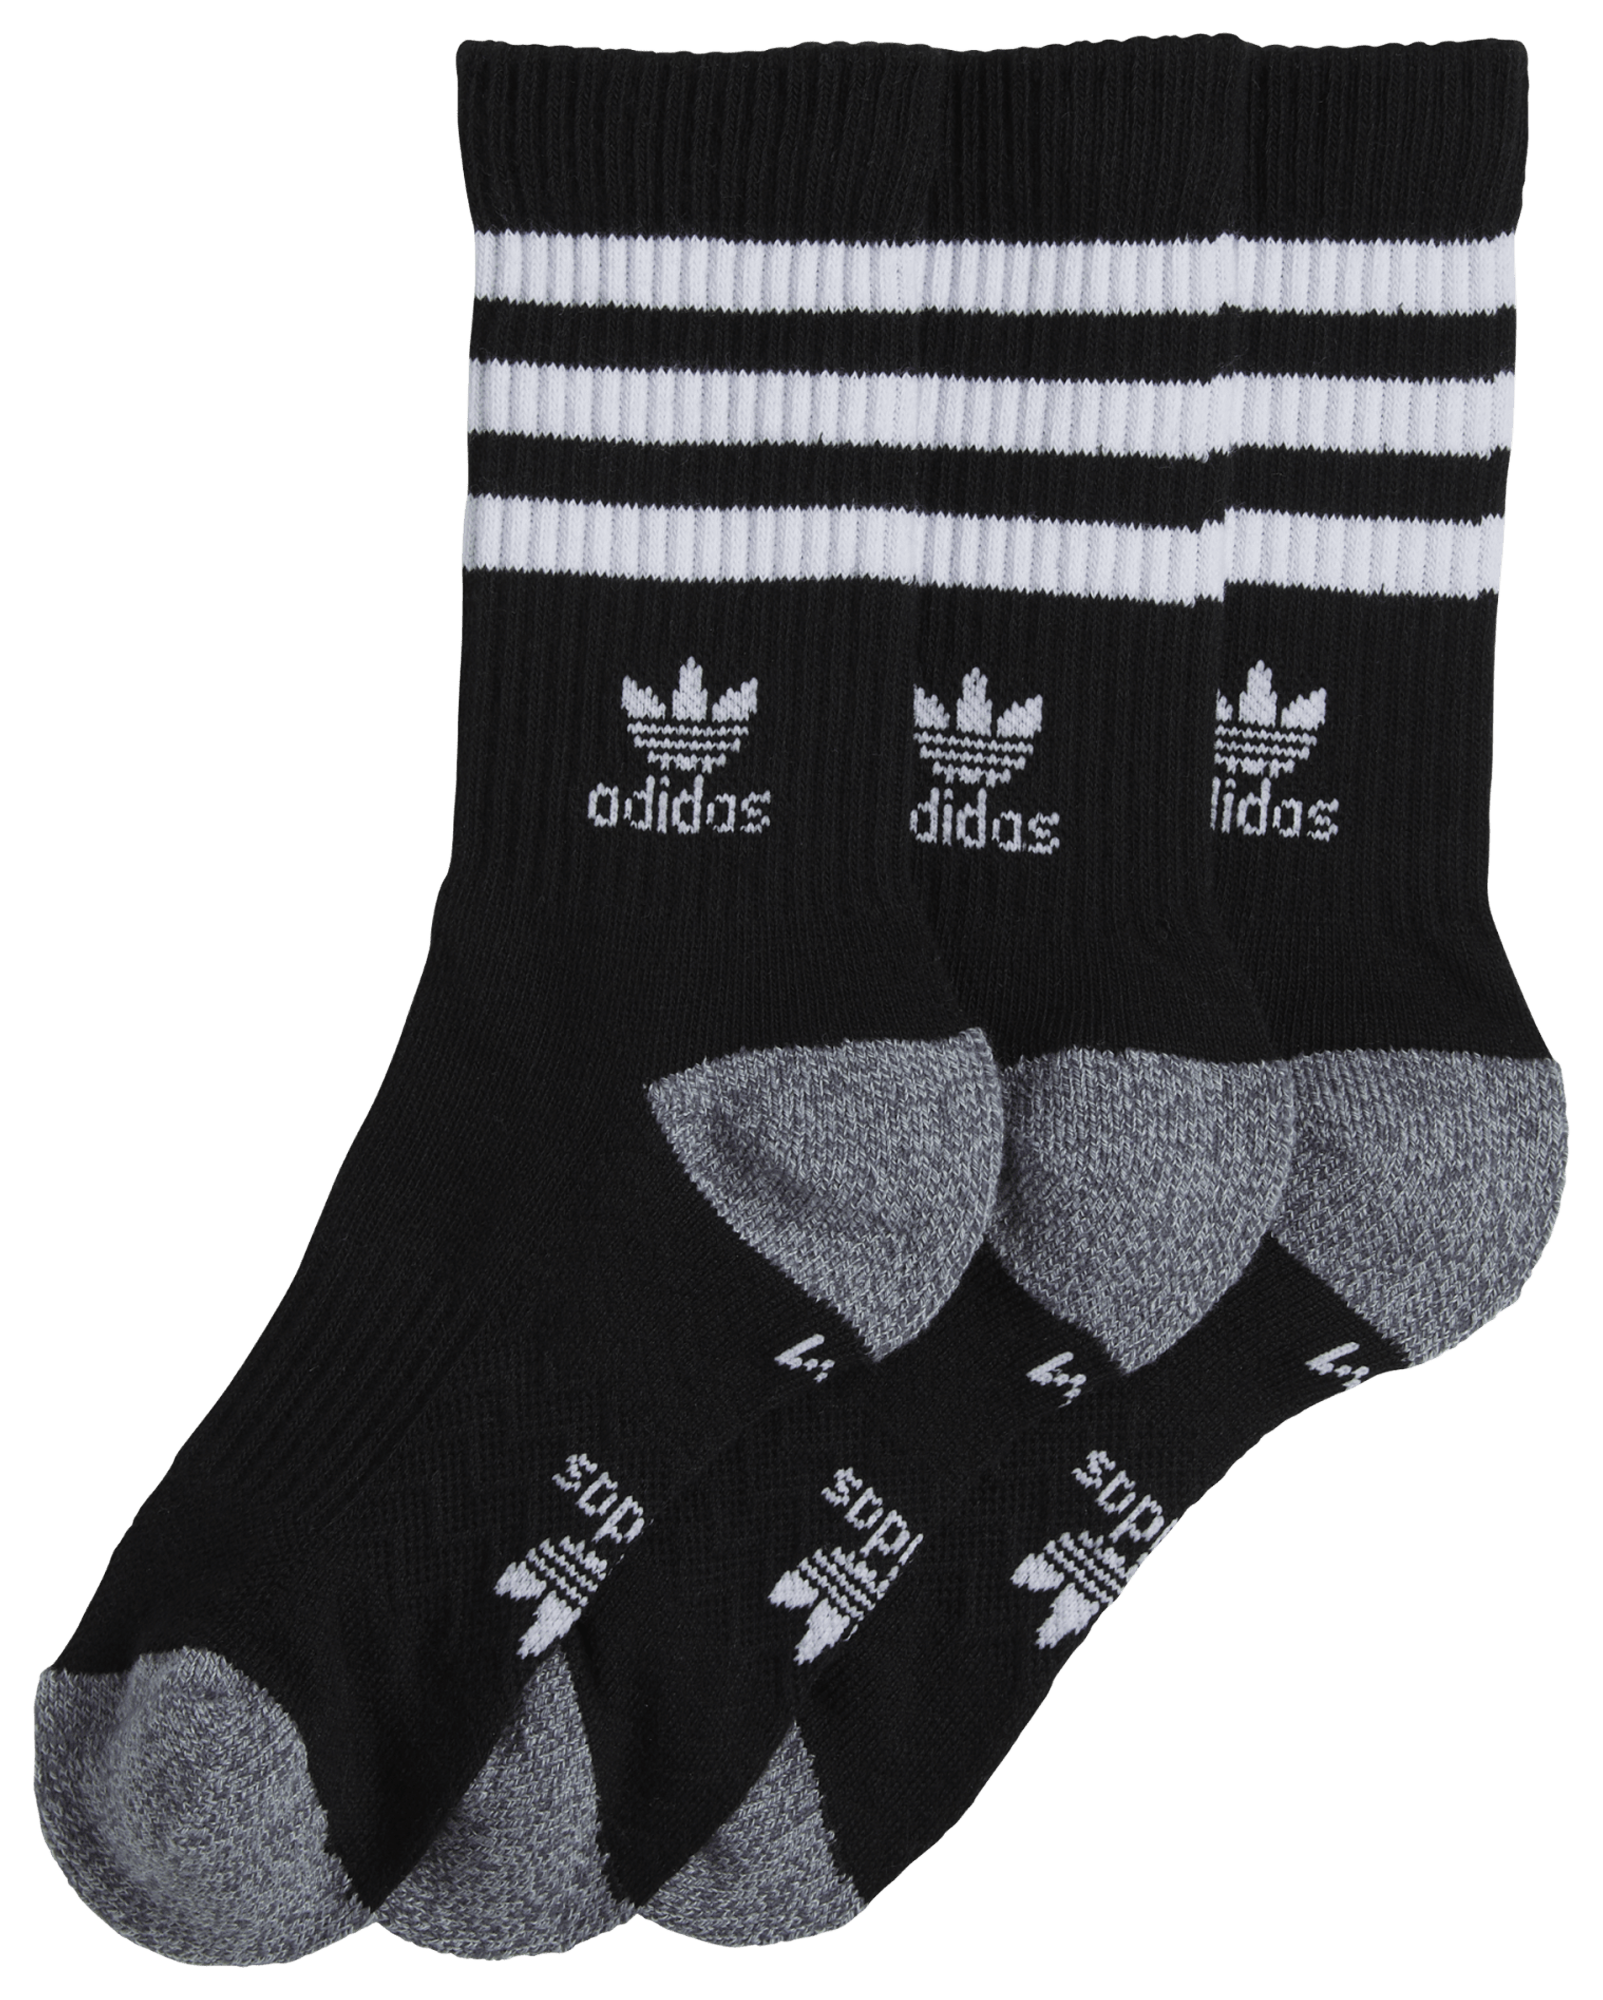 adidas Originals Roller 2.0 3-Pack Crew Socks - Men's